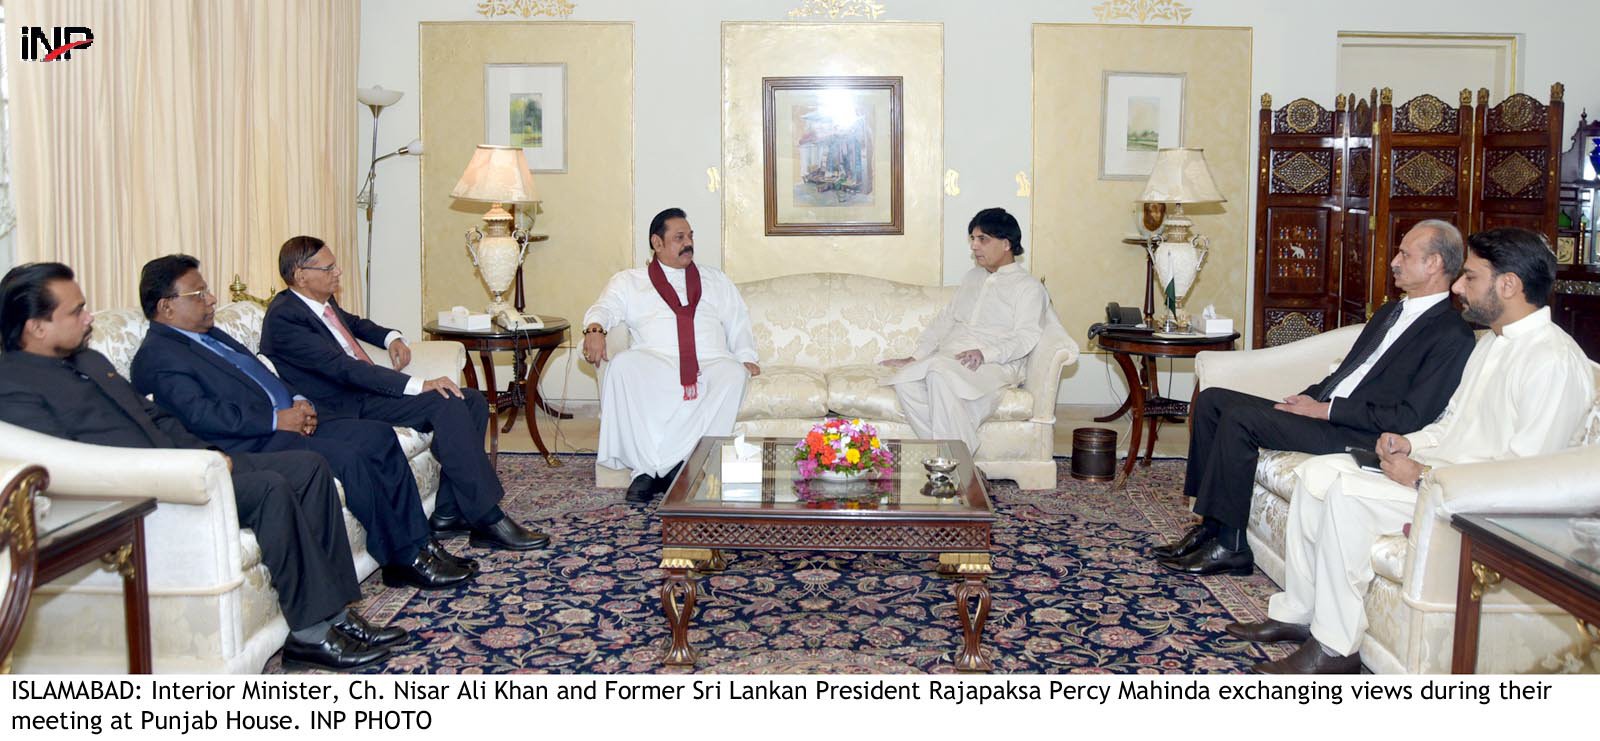 chaudhry nisar with sri lankan president mahinda rajapaksa